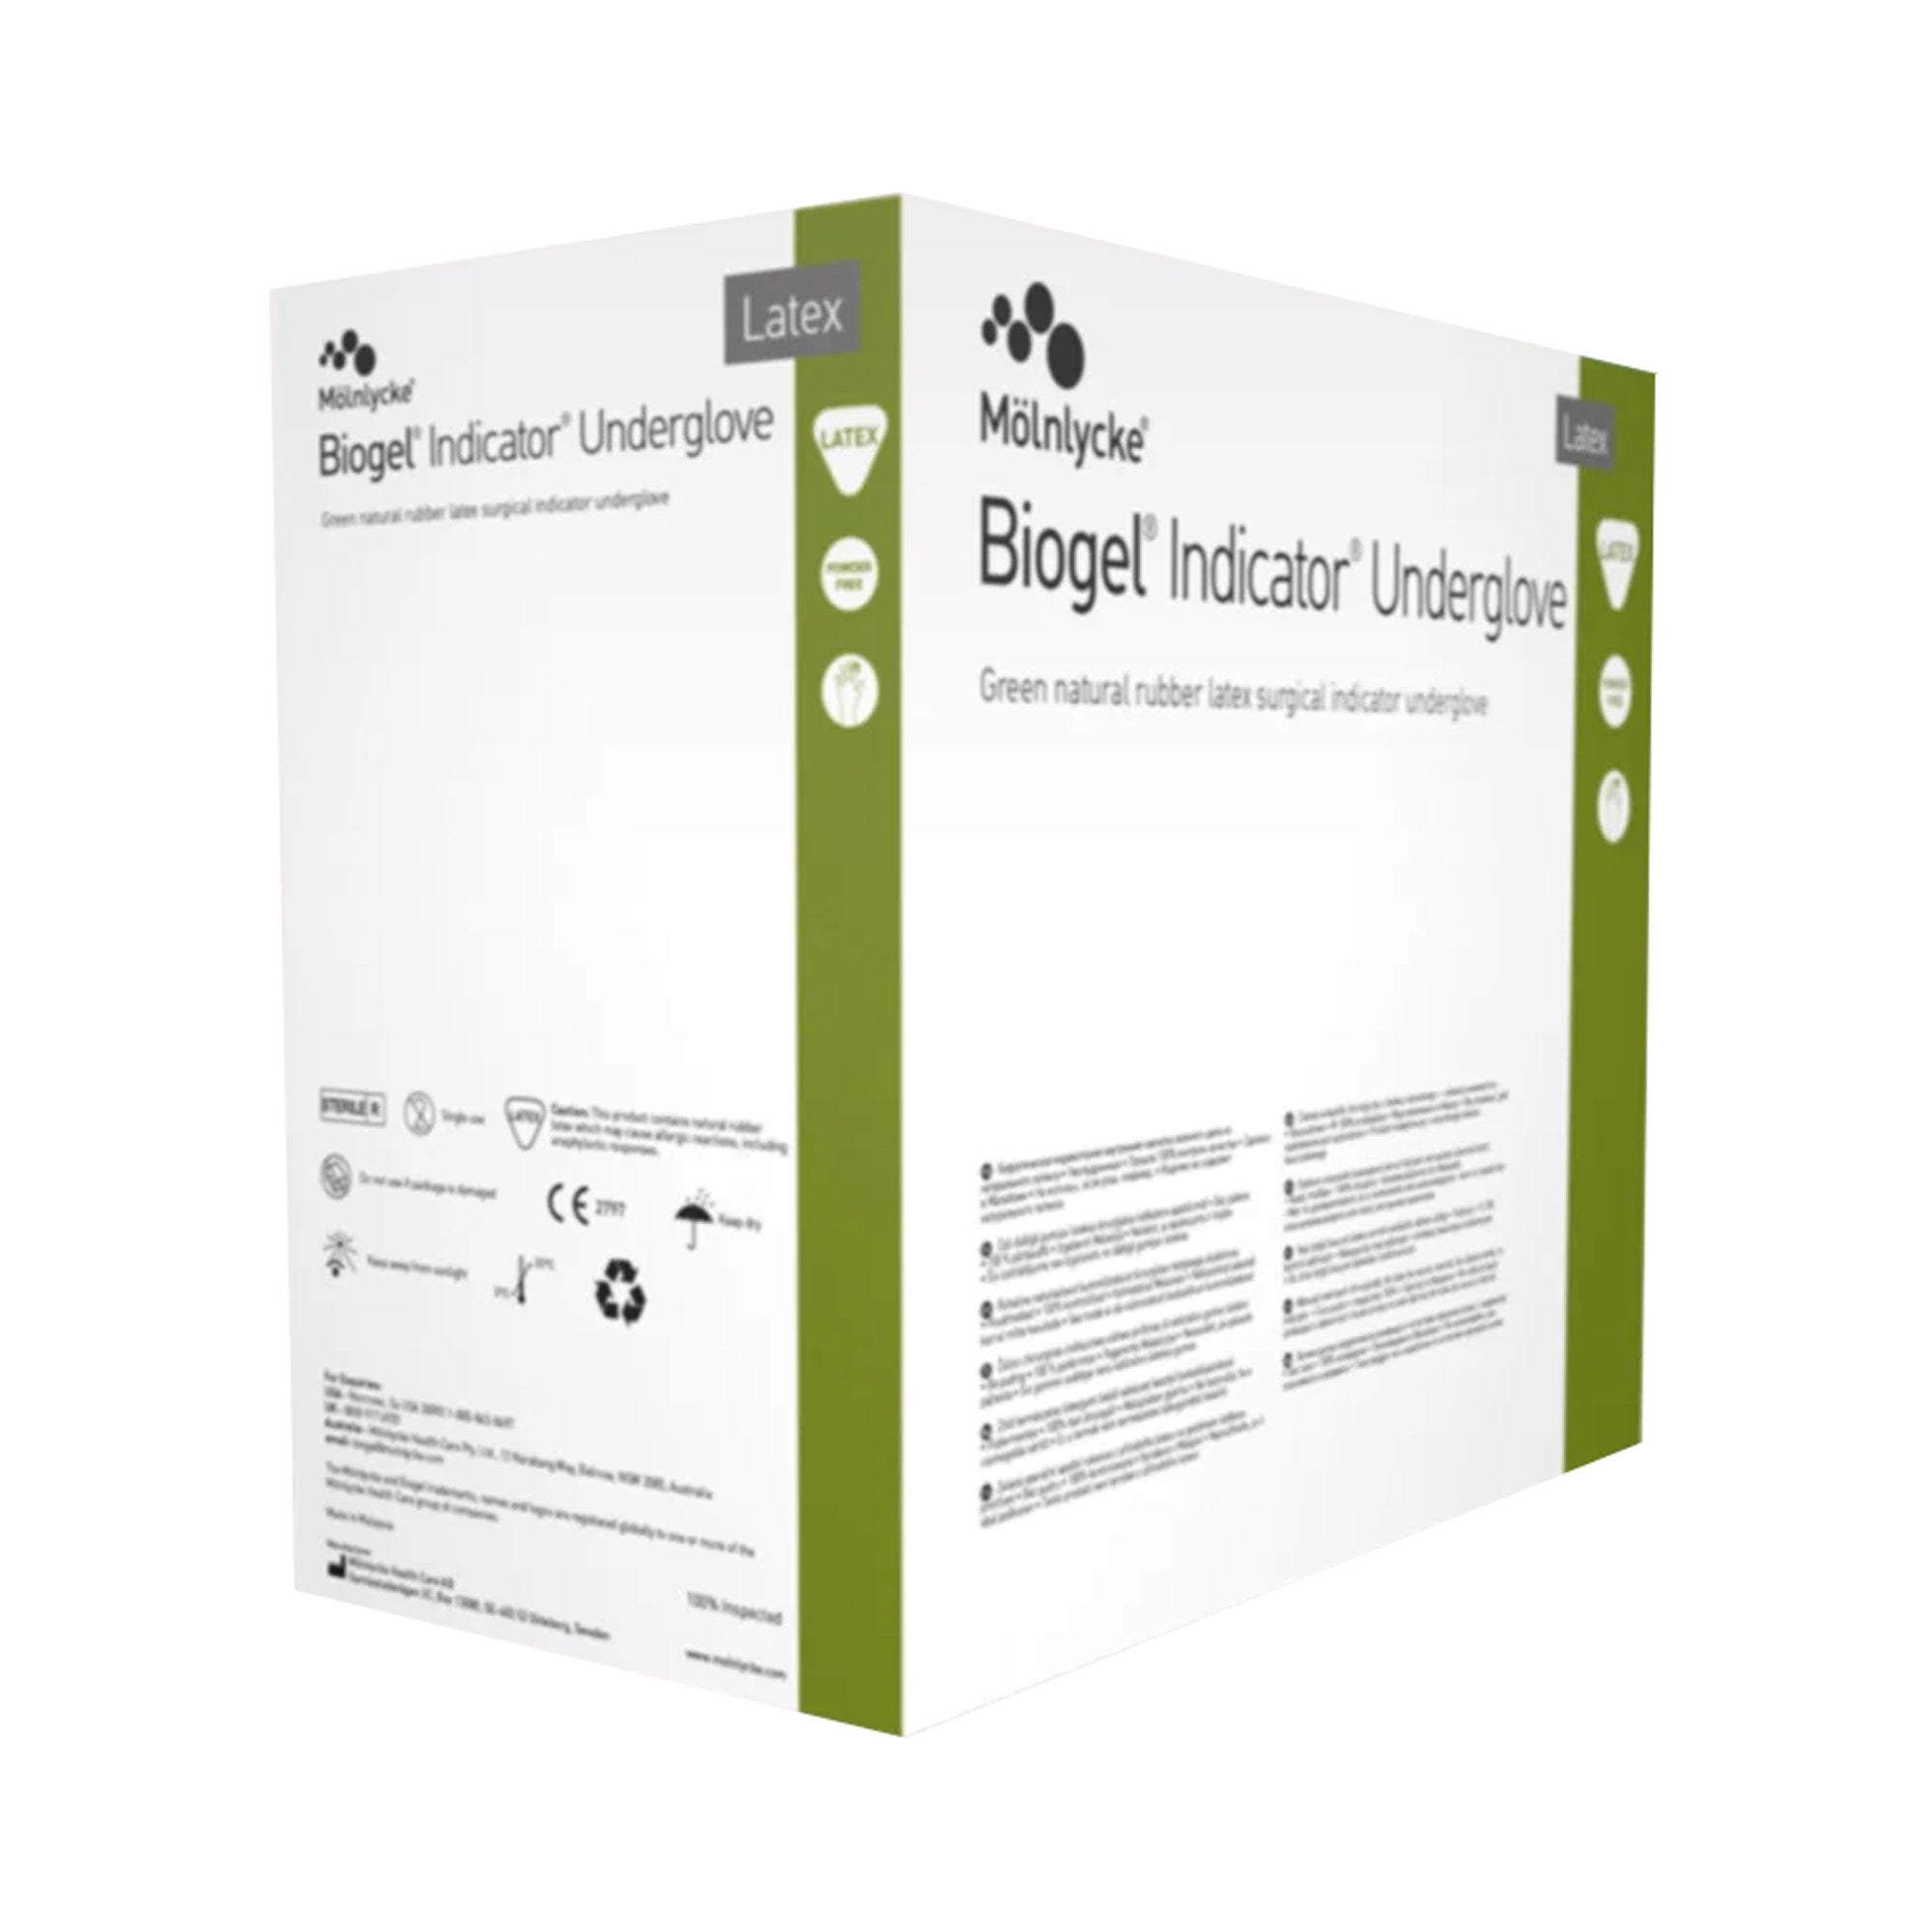 Underglove Biogel Indicator Size 8.5 Sterile Pair Latex Smooth Green